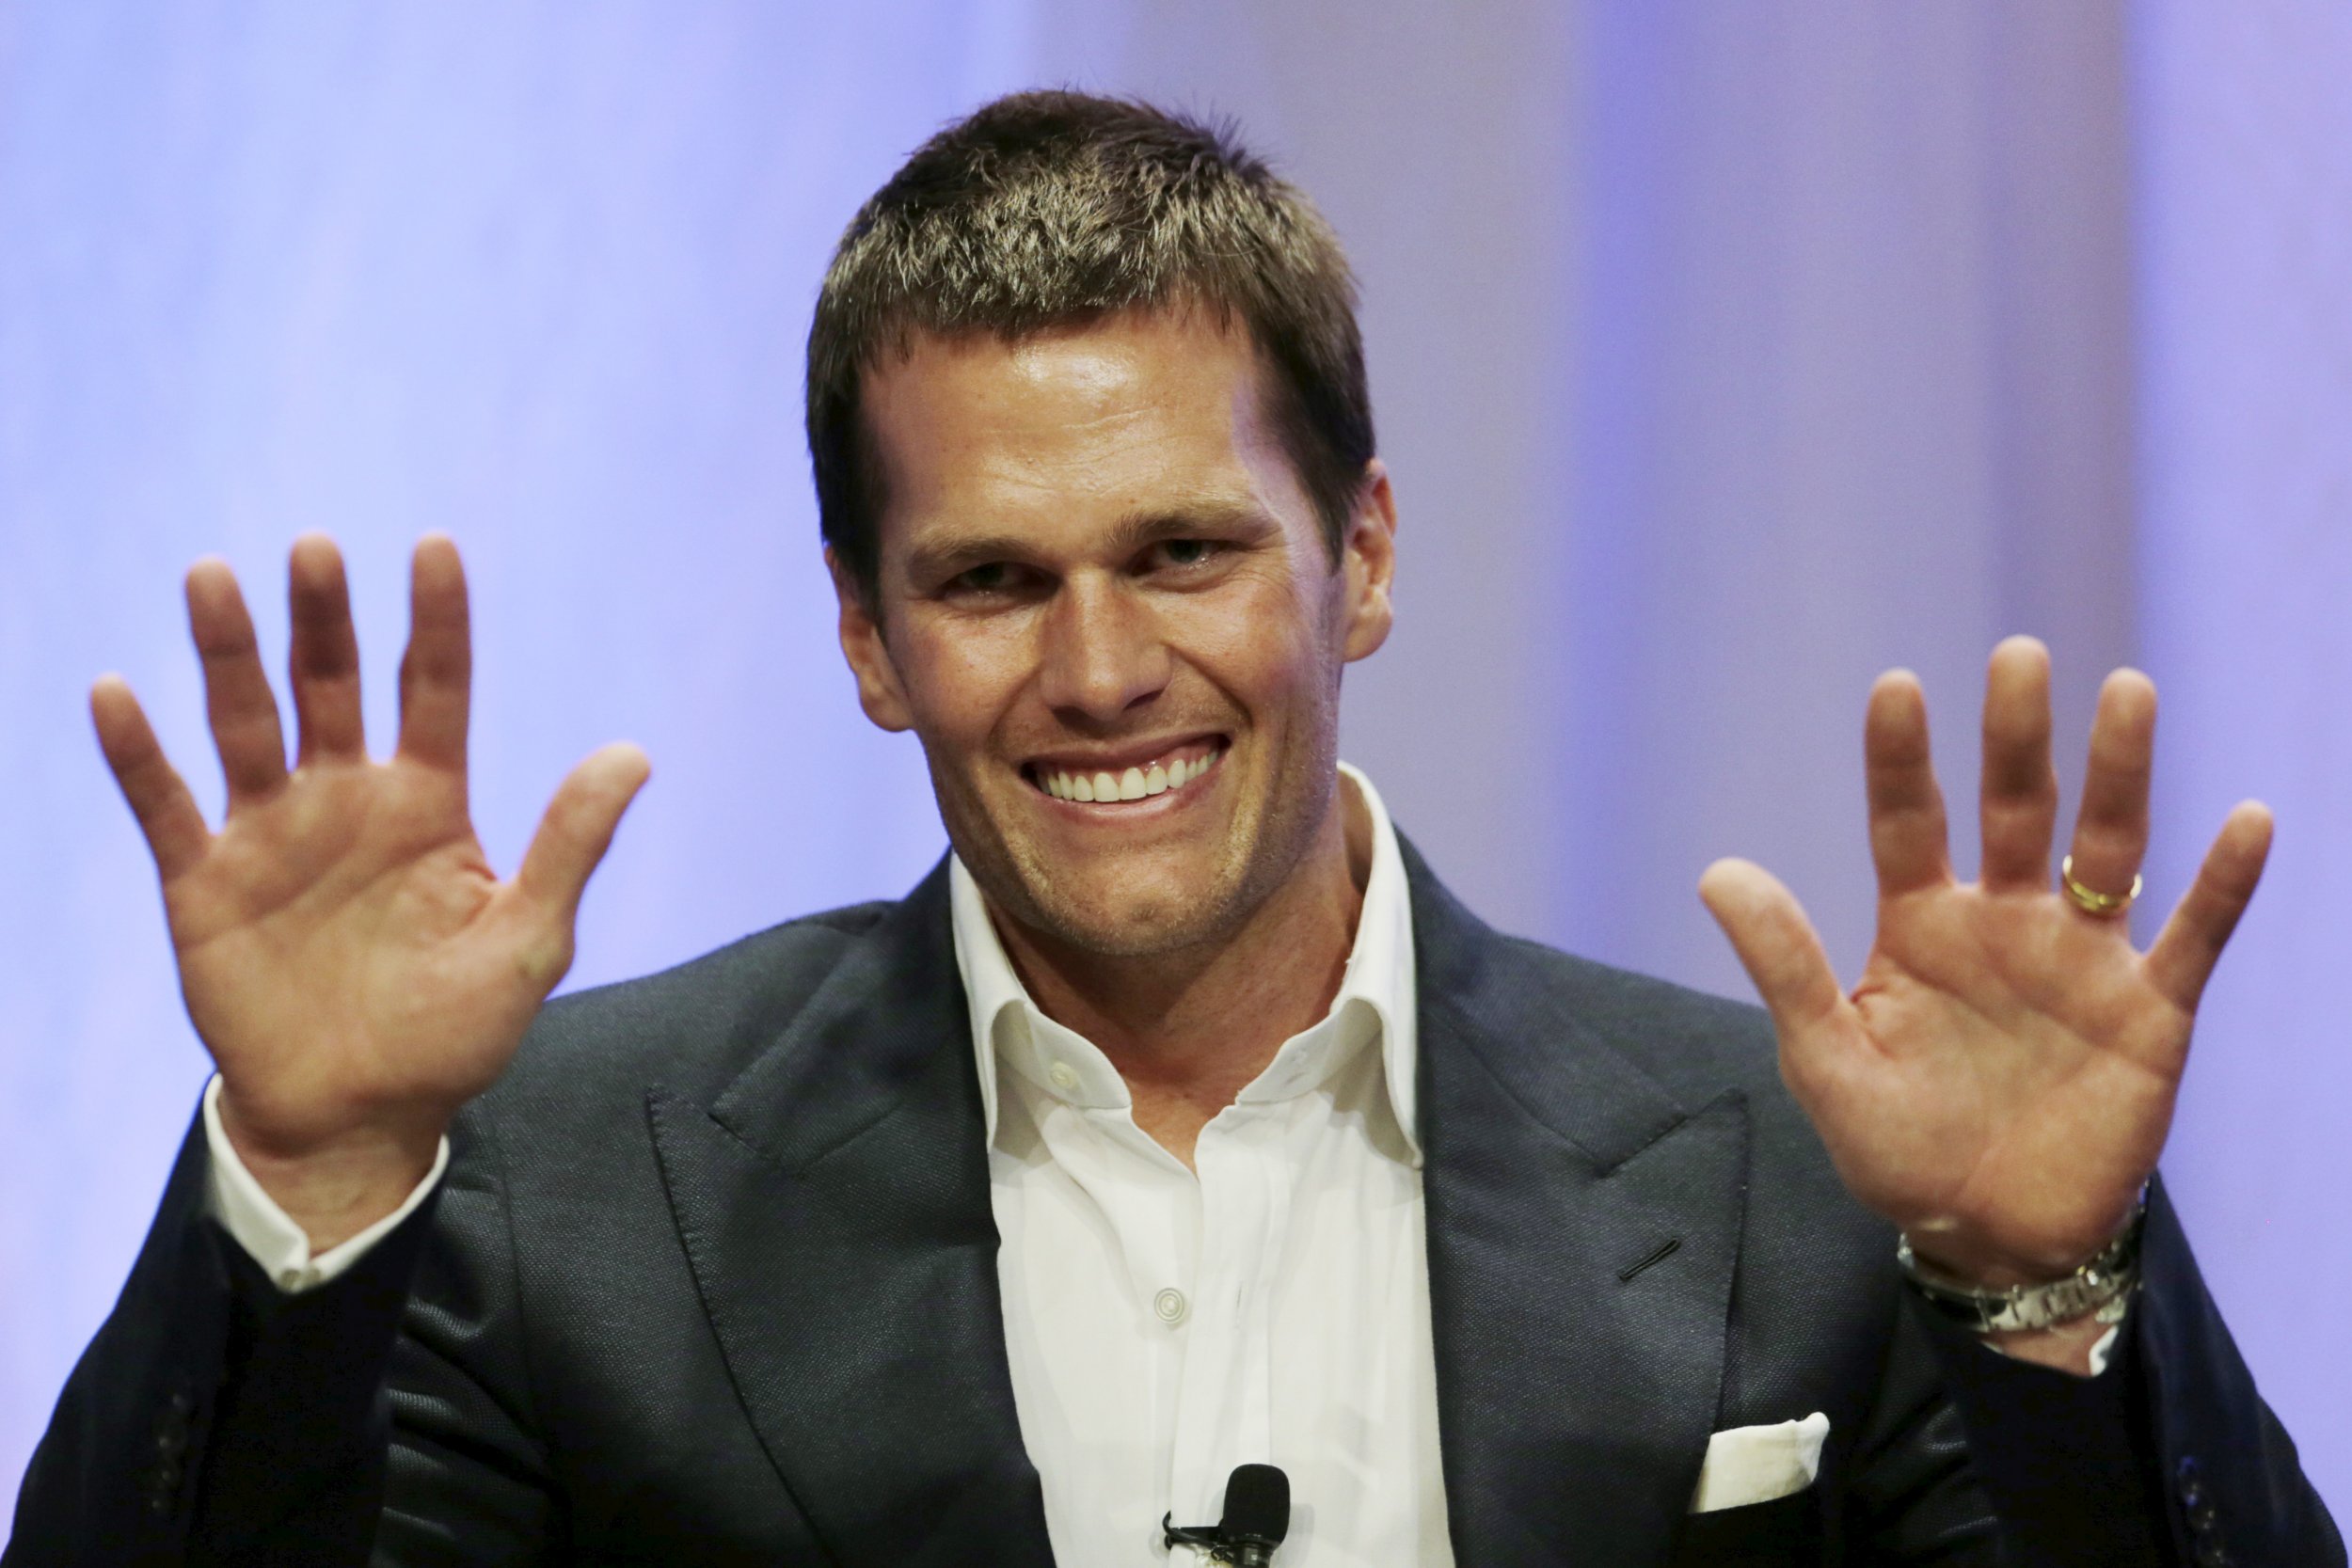 Four Super Bowl Rings on Hand, Tom Brady Fist Pumps